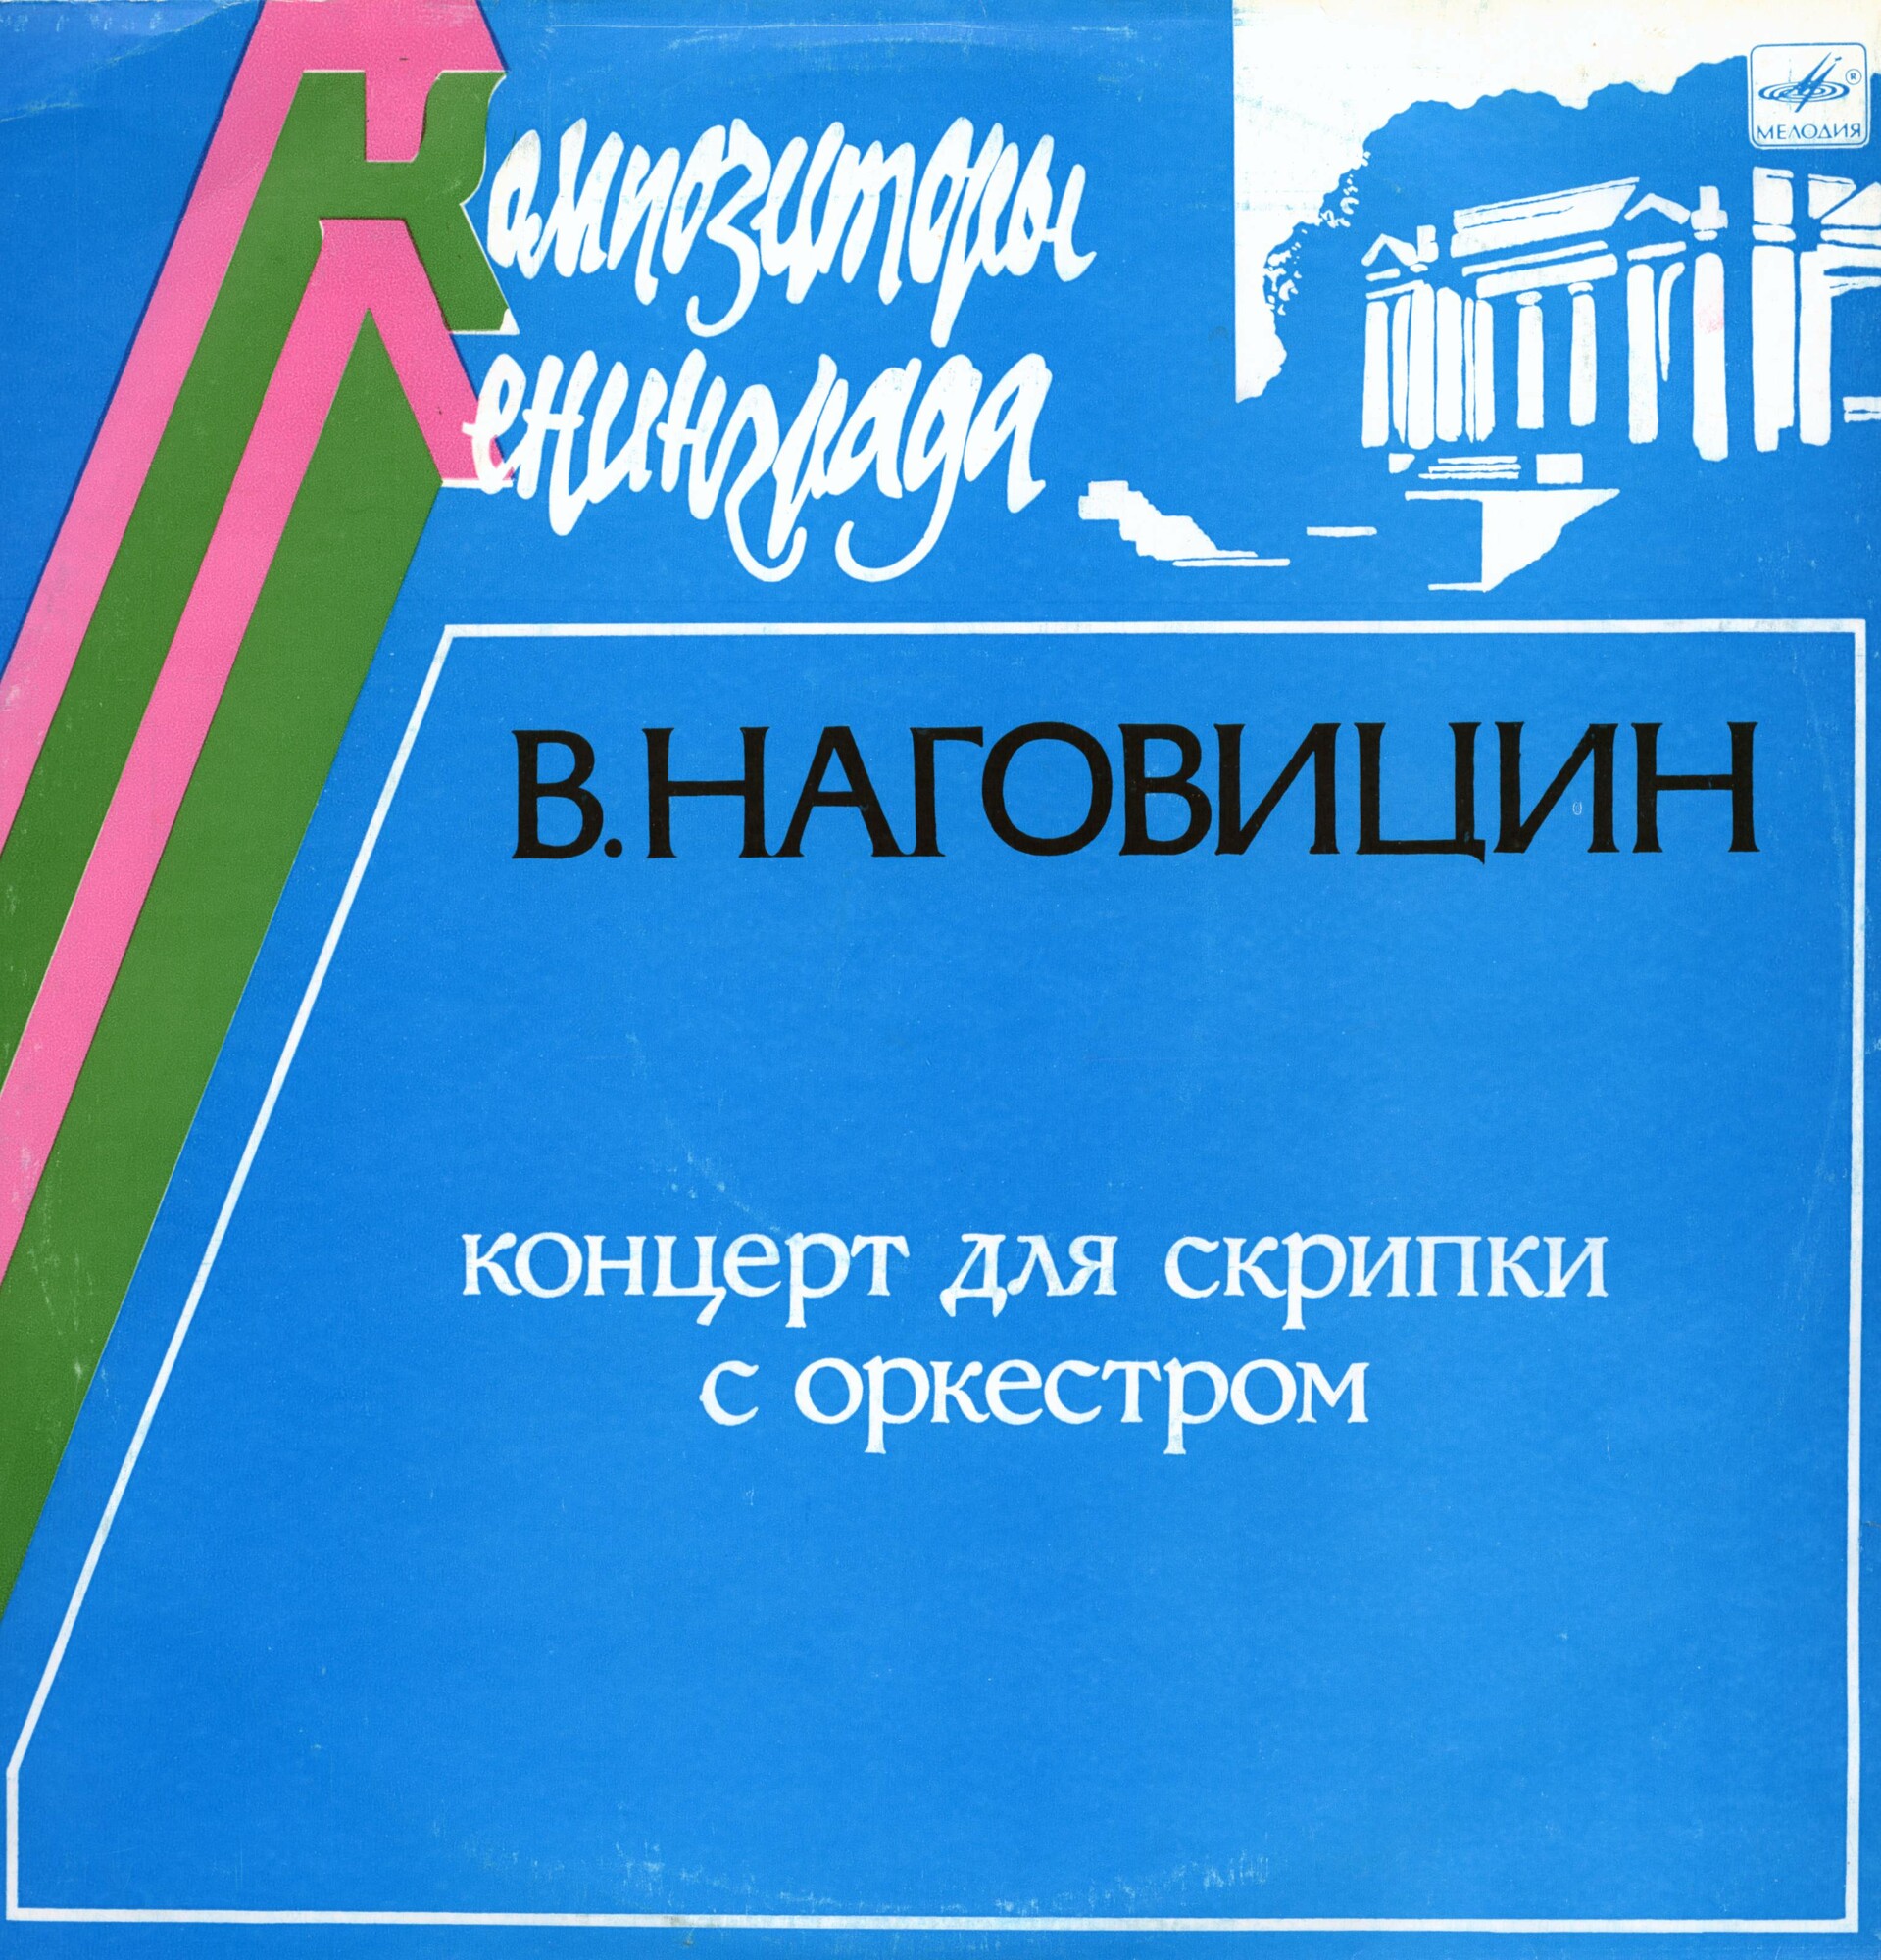 В. НАГОВИЦИН (1939): Концерт для скрипки с оркестром, соч. 21